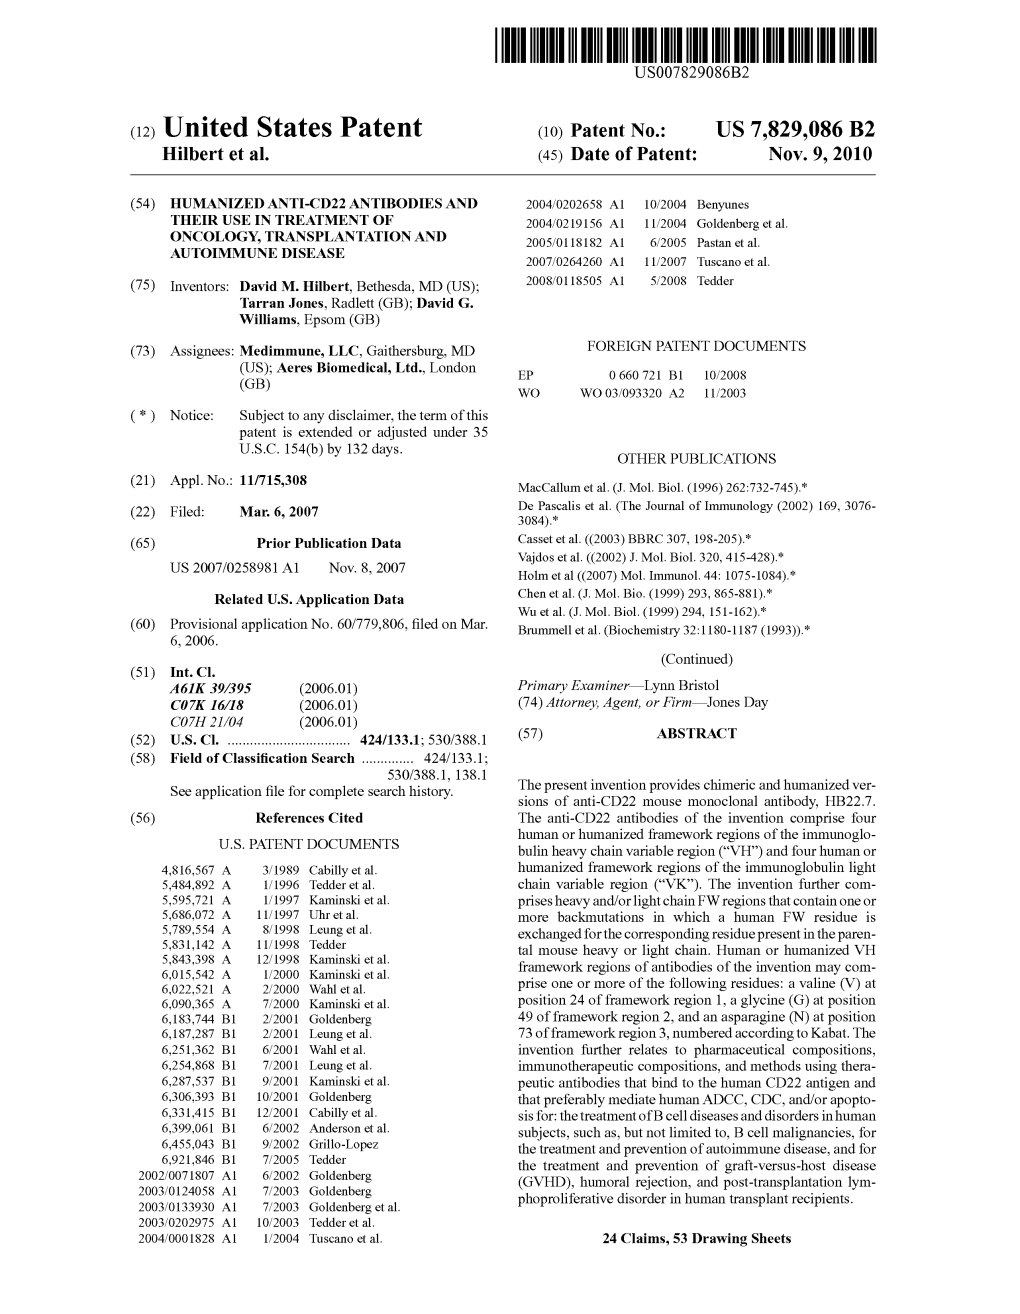 (12) United States Patent (10) Patent No.: US 7,829,086 B2 Hilbert Et Al